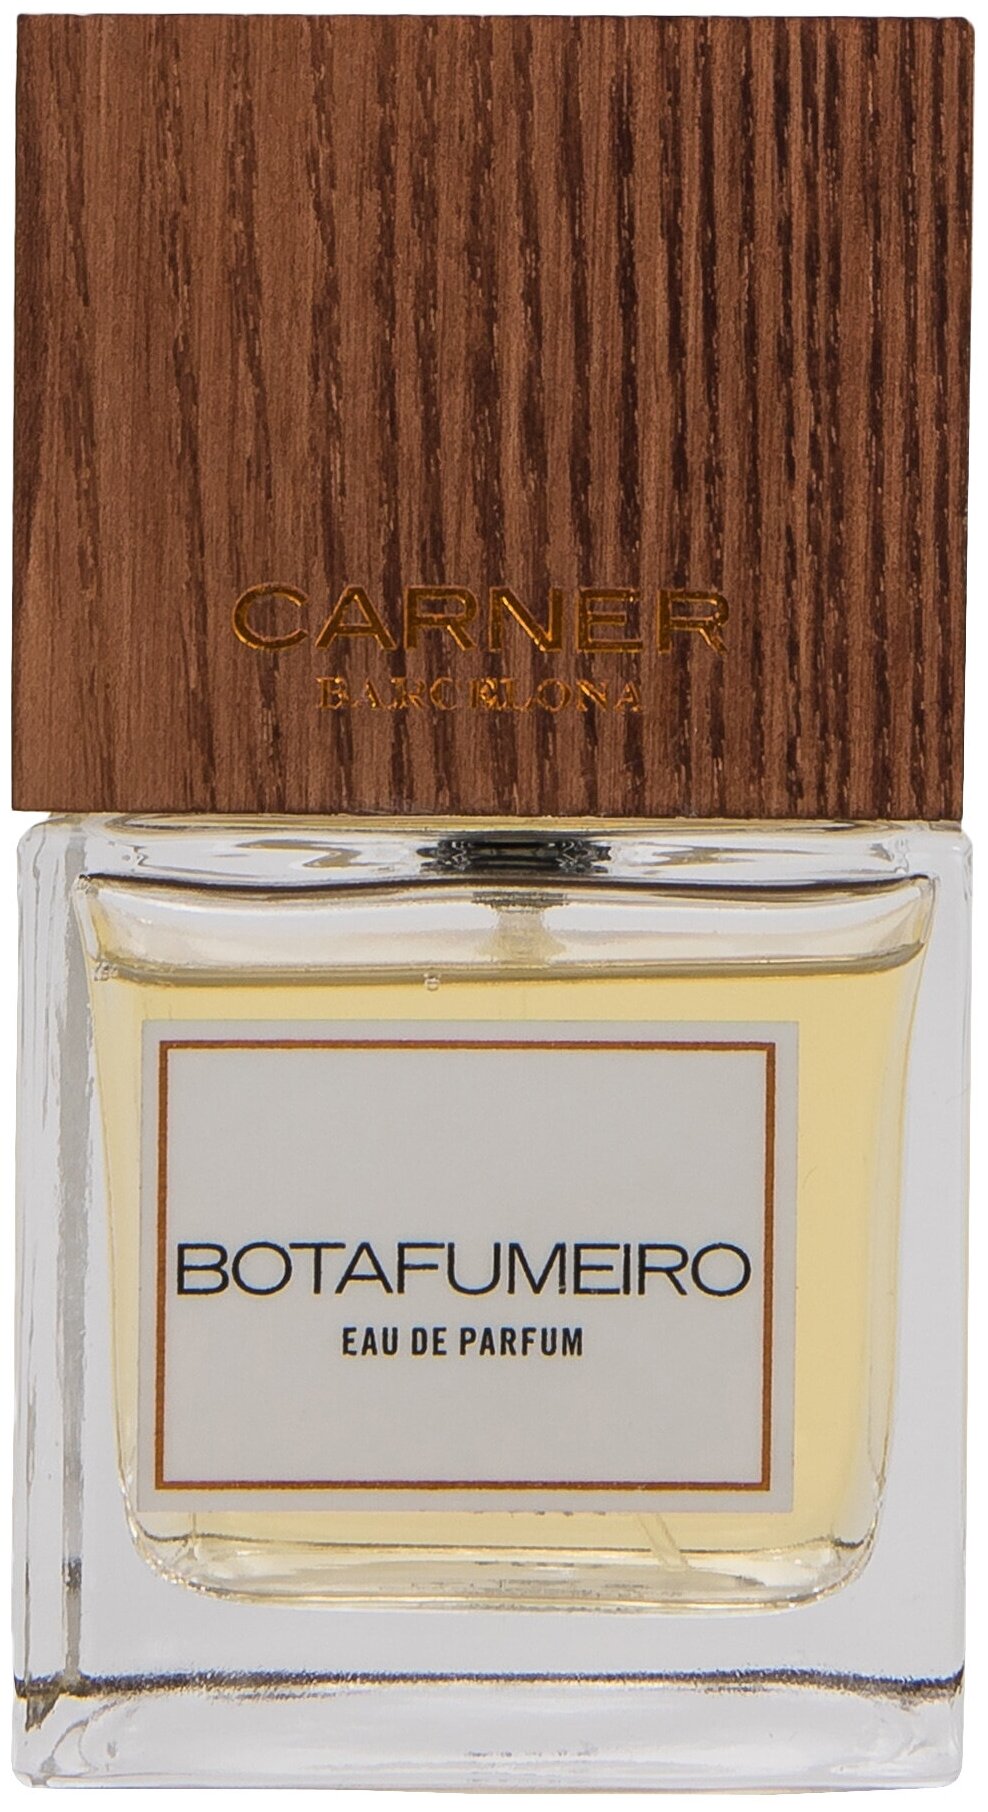 Carner Barcelona парфюмерная вода Botafumeiro, 50 мл